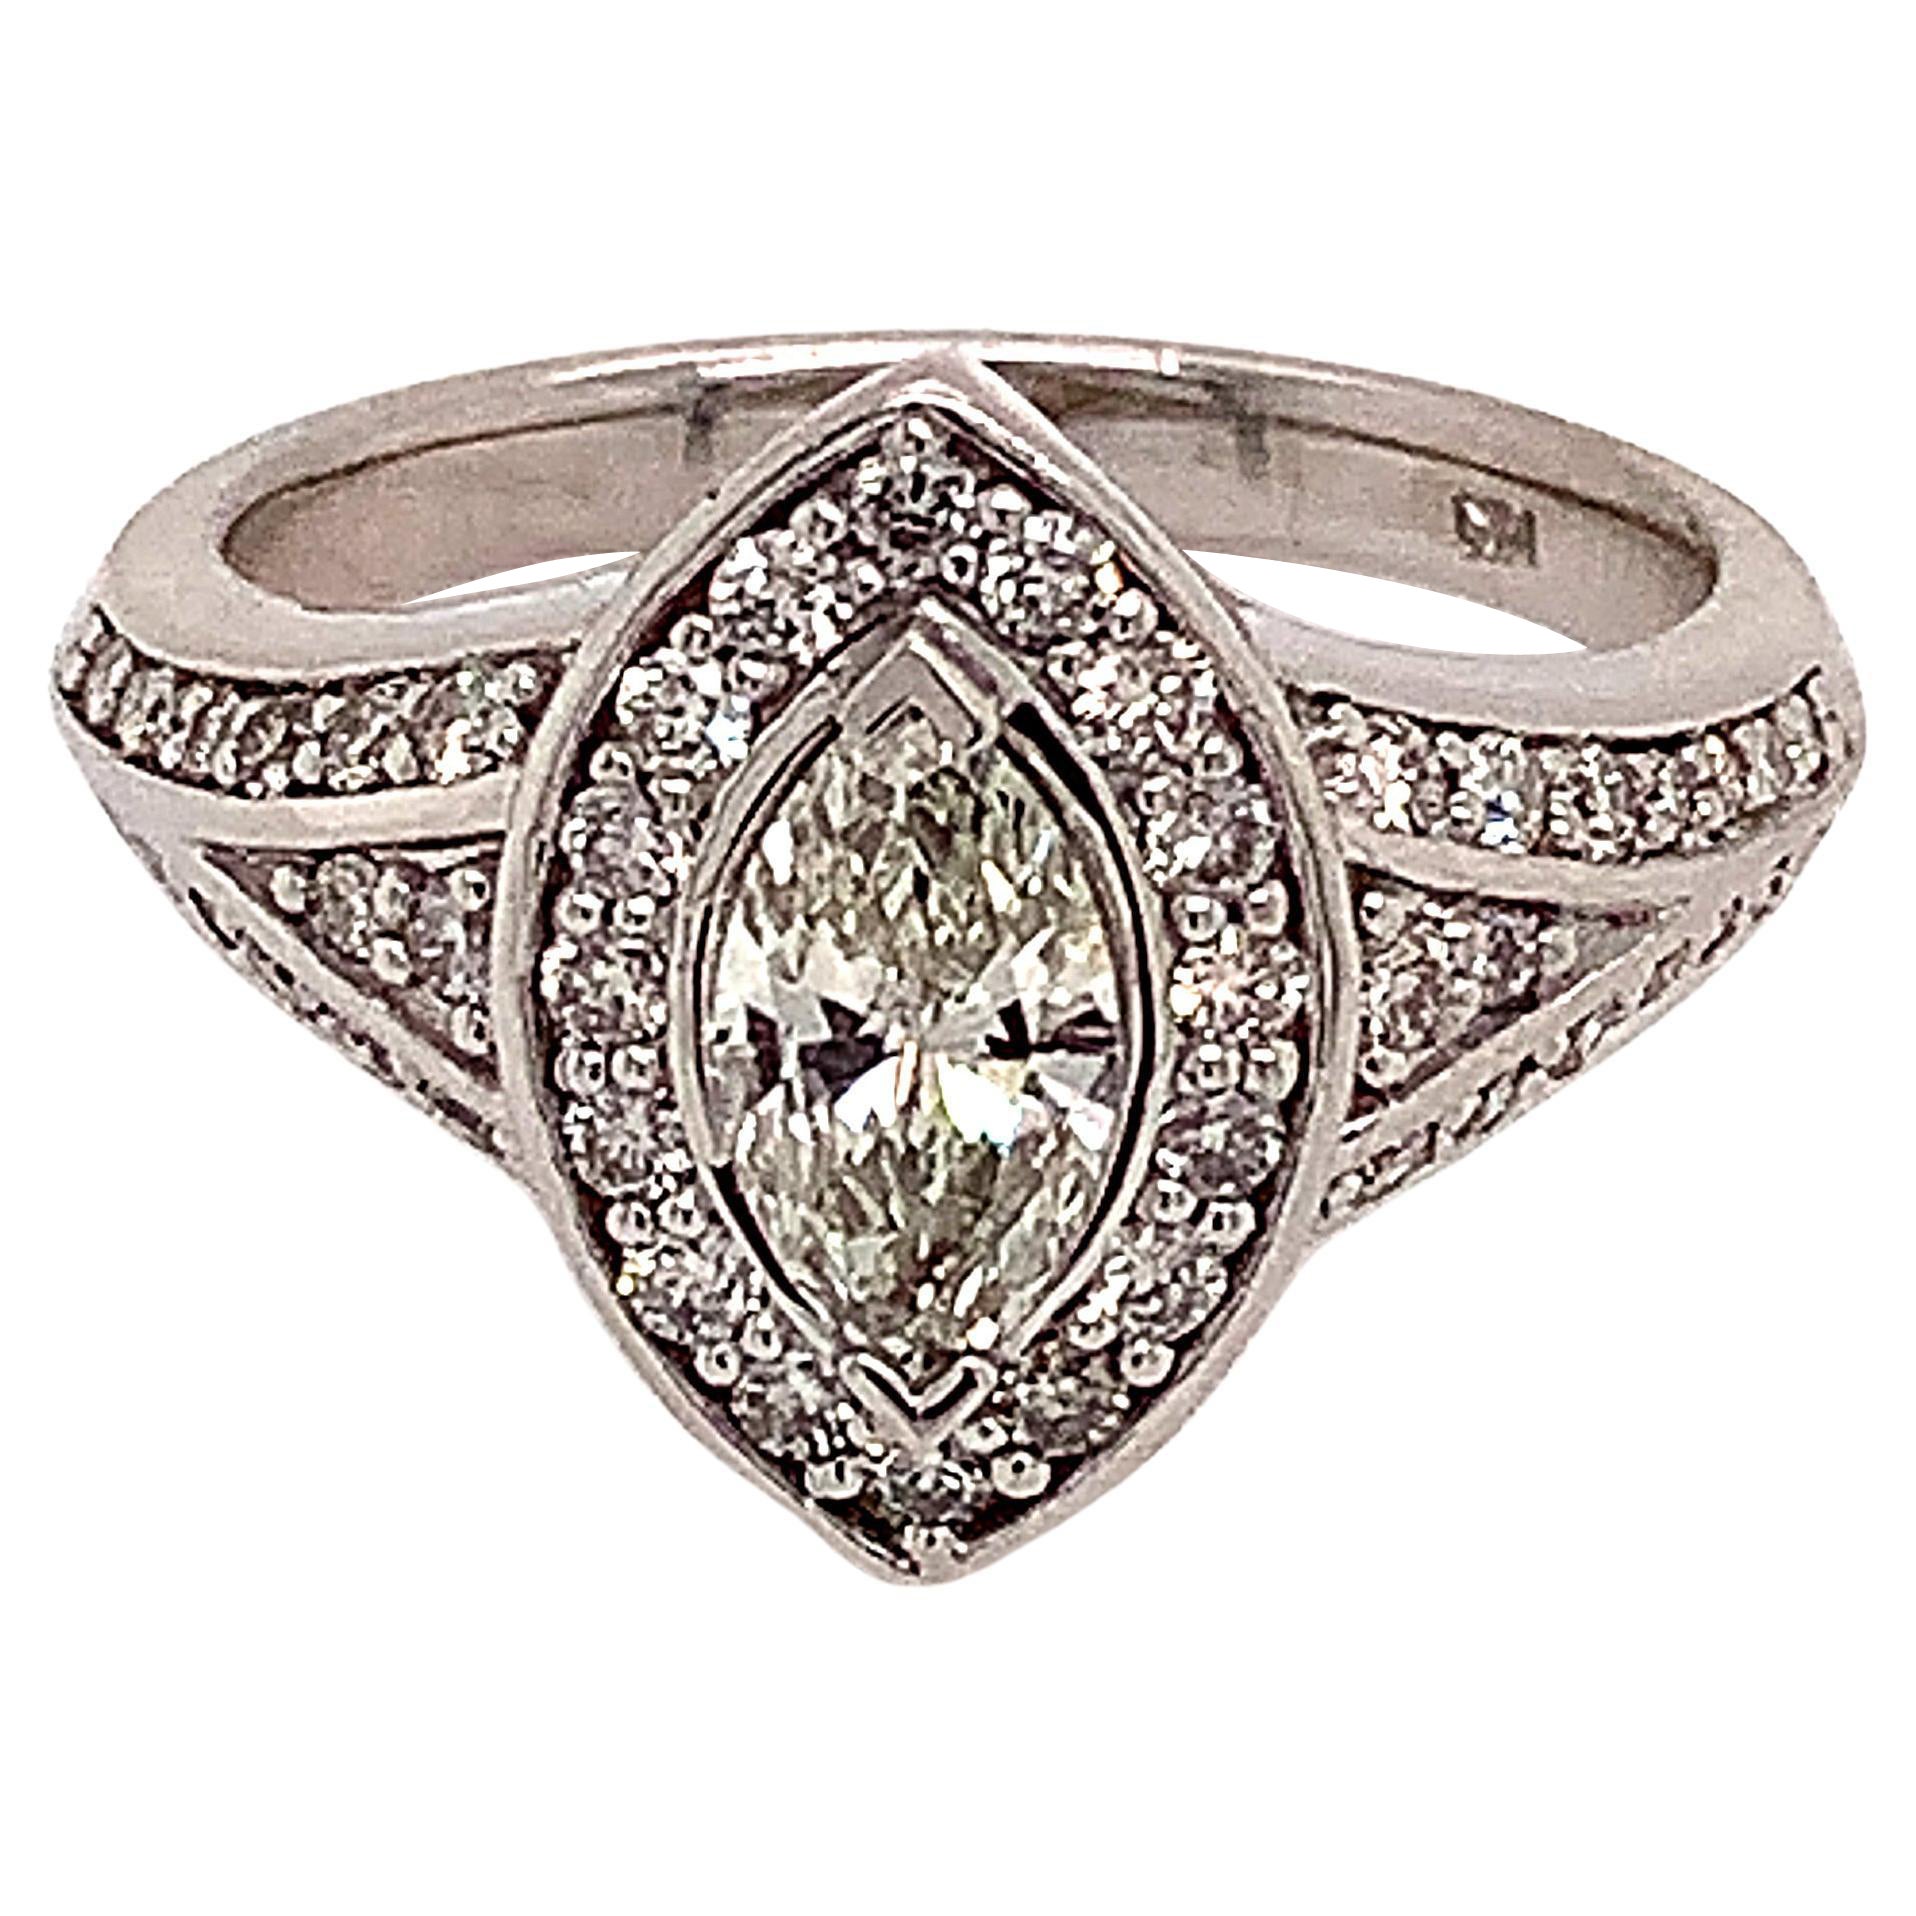 Diamond Ring 14k White Gold 0.45 TCW 4.88g Certified